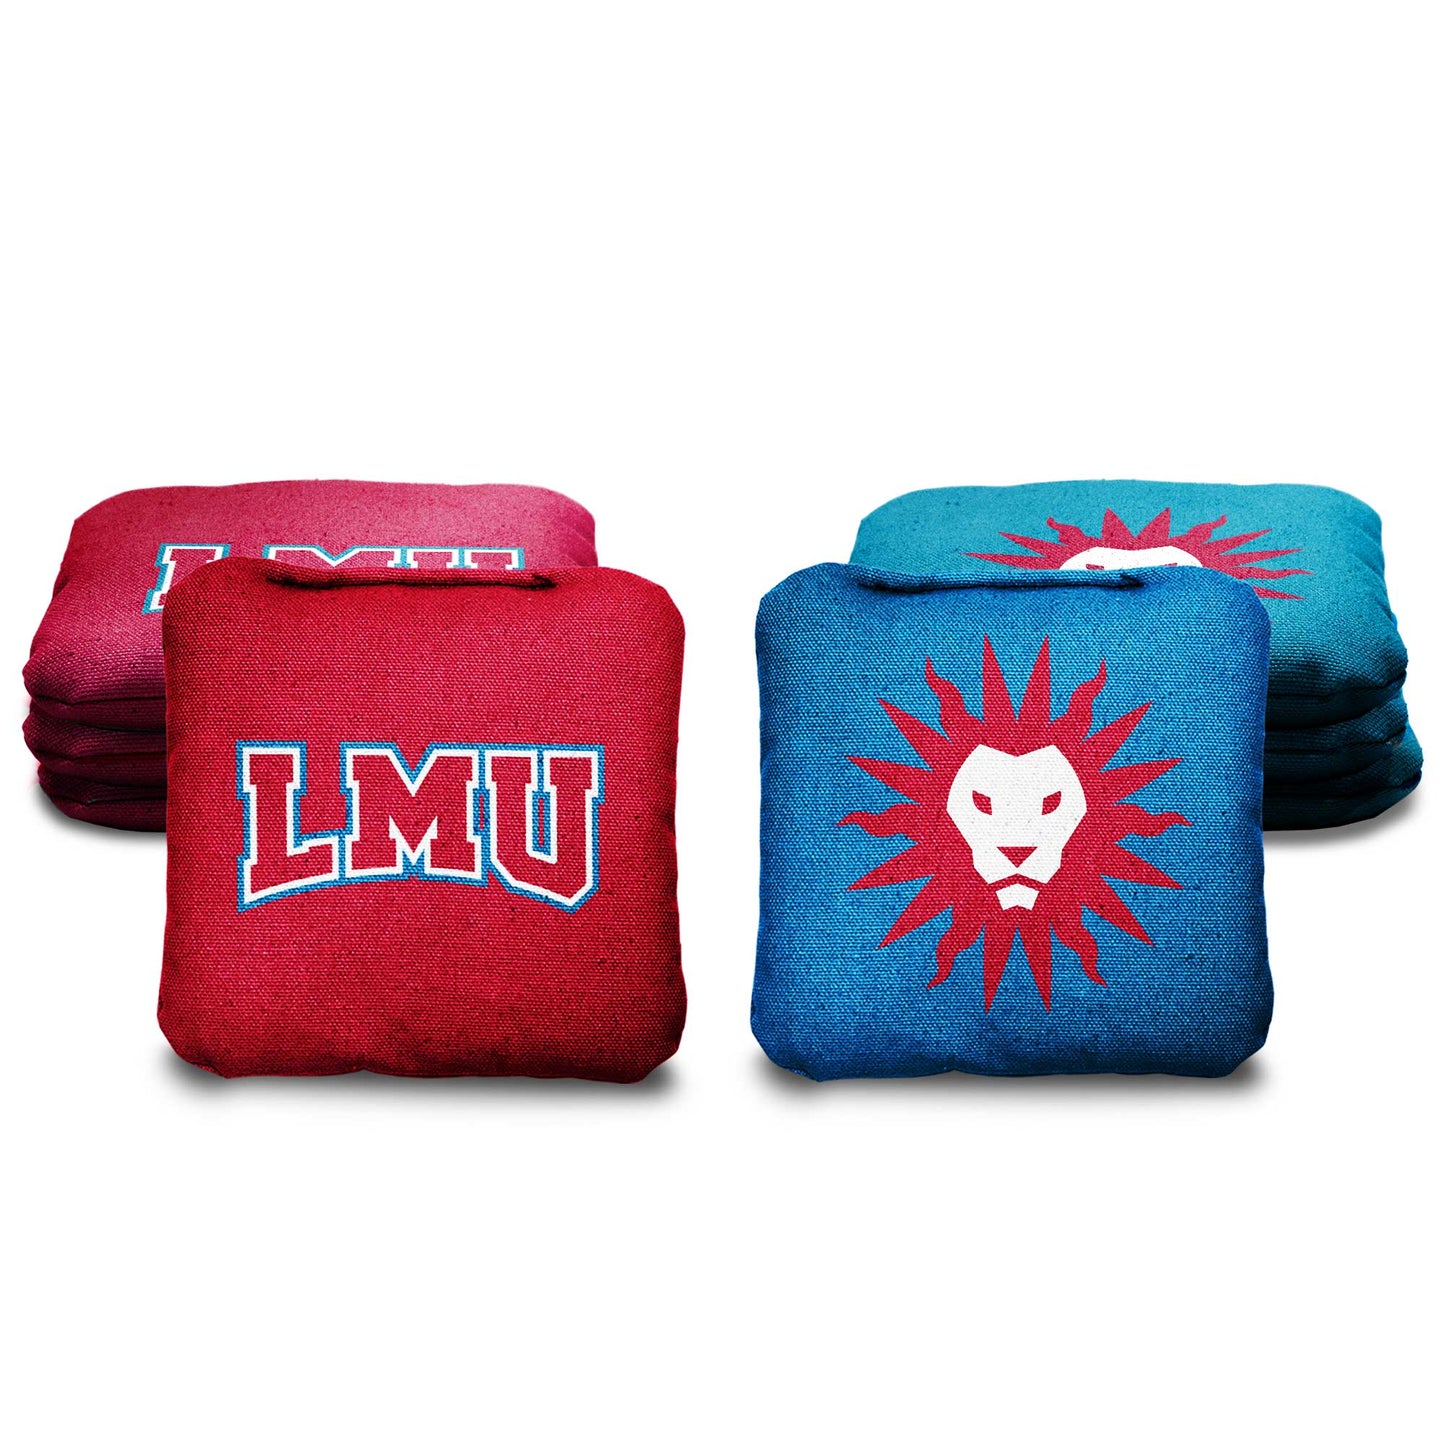 Loyola Marymount University Cornhole Bags - 8 Cornhole Bags